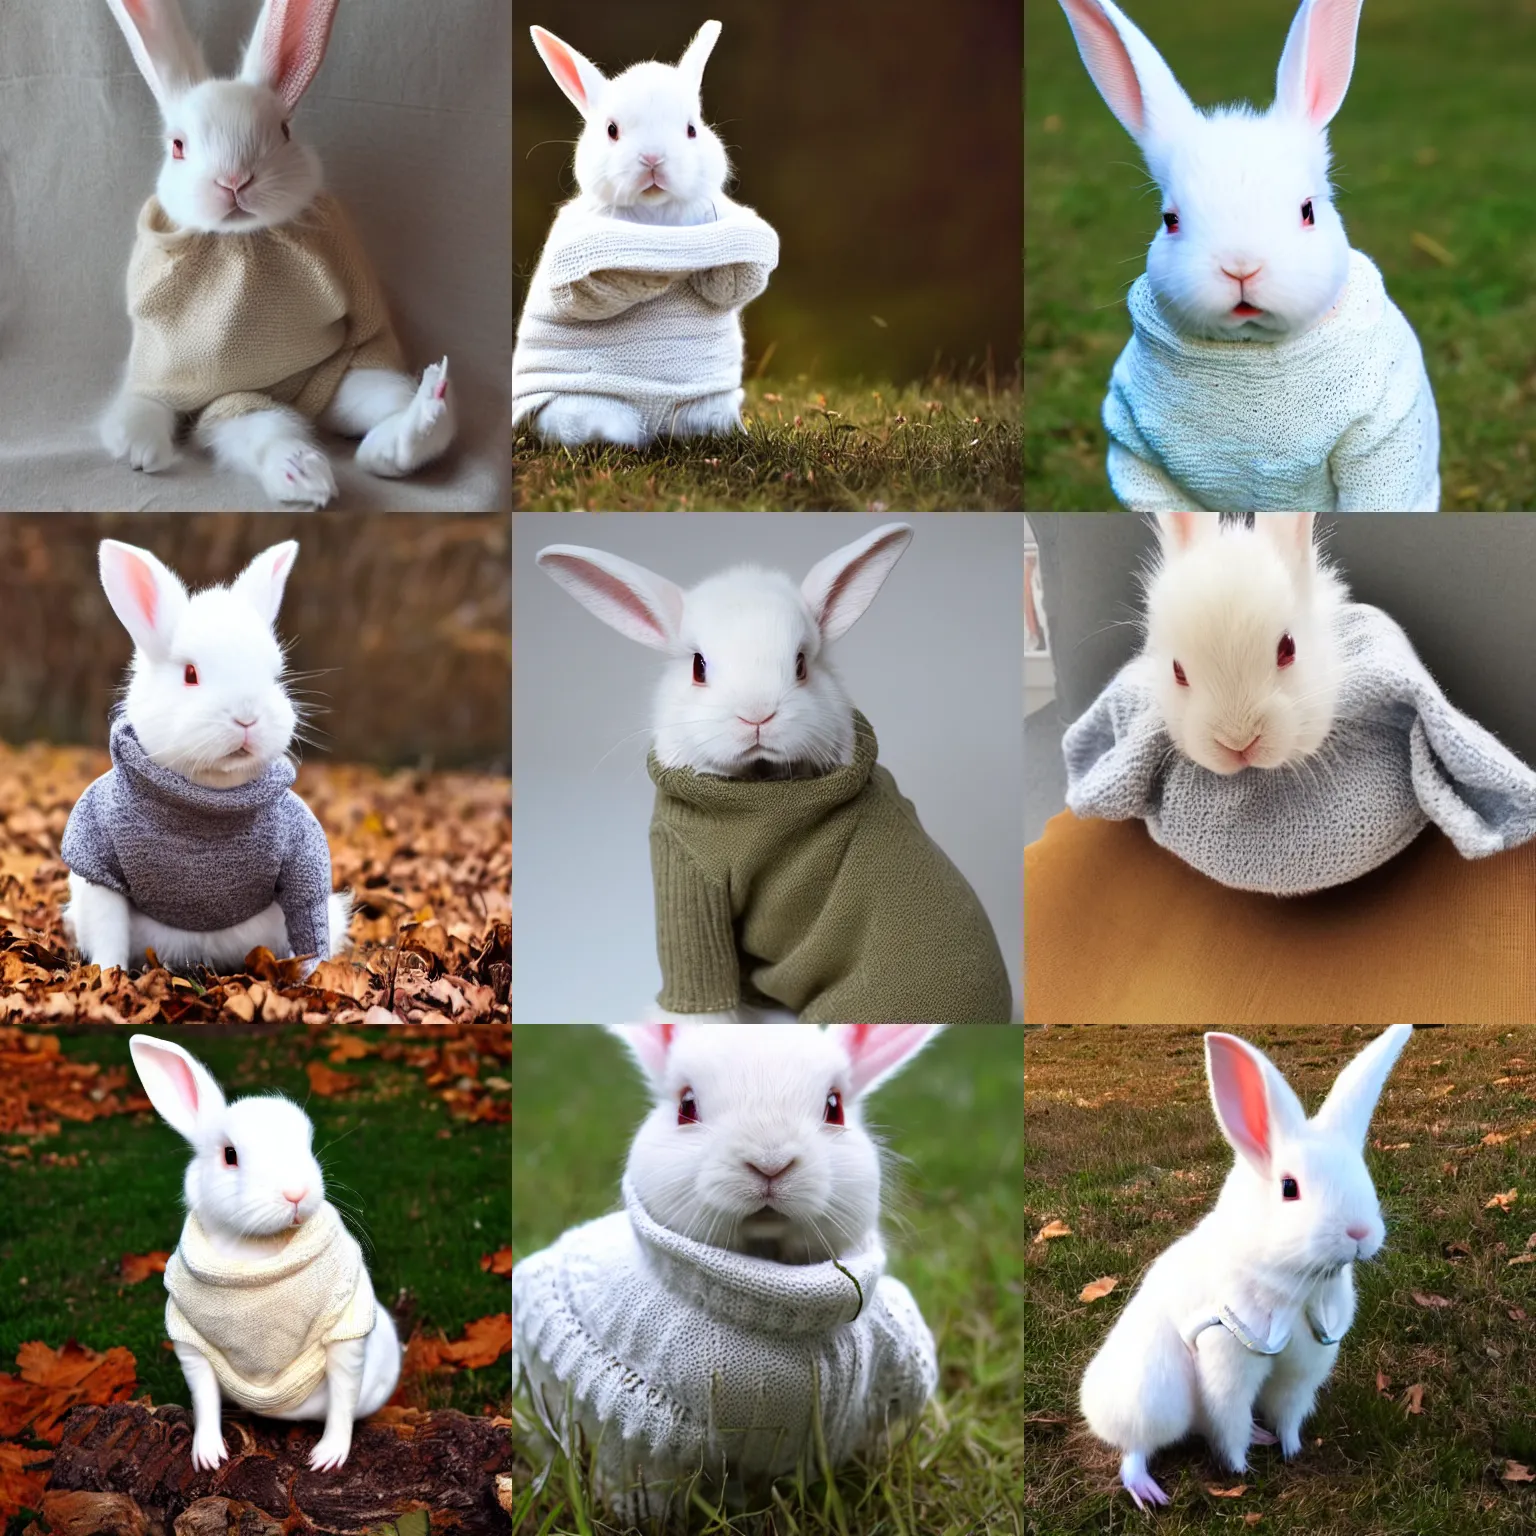 Prompt: albino rabbit in a sweater.